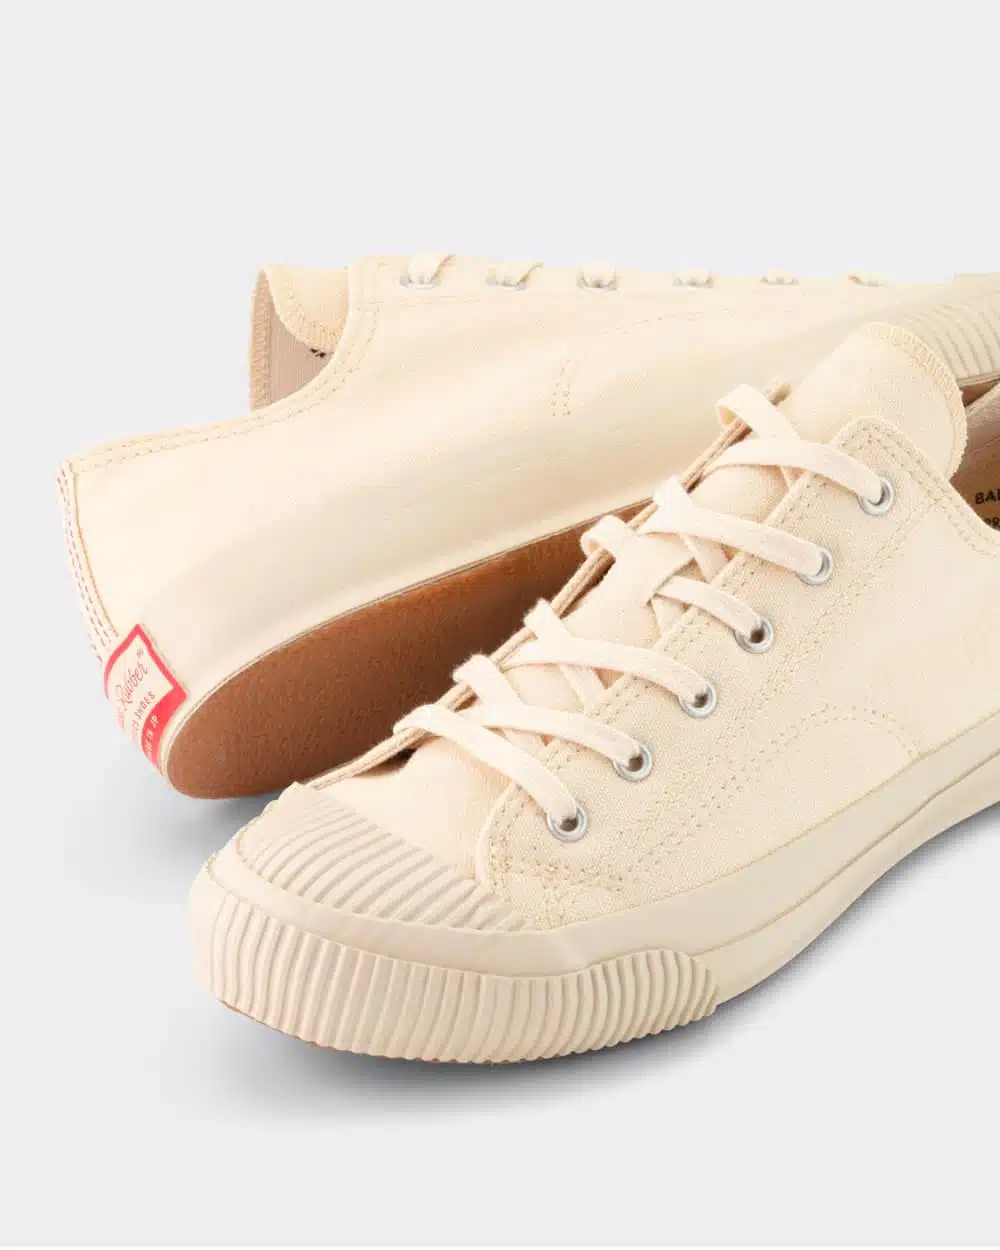 PRAS Shellcap Low Sneakers - Kinari/Off White